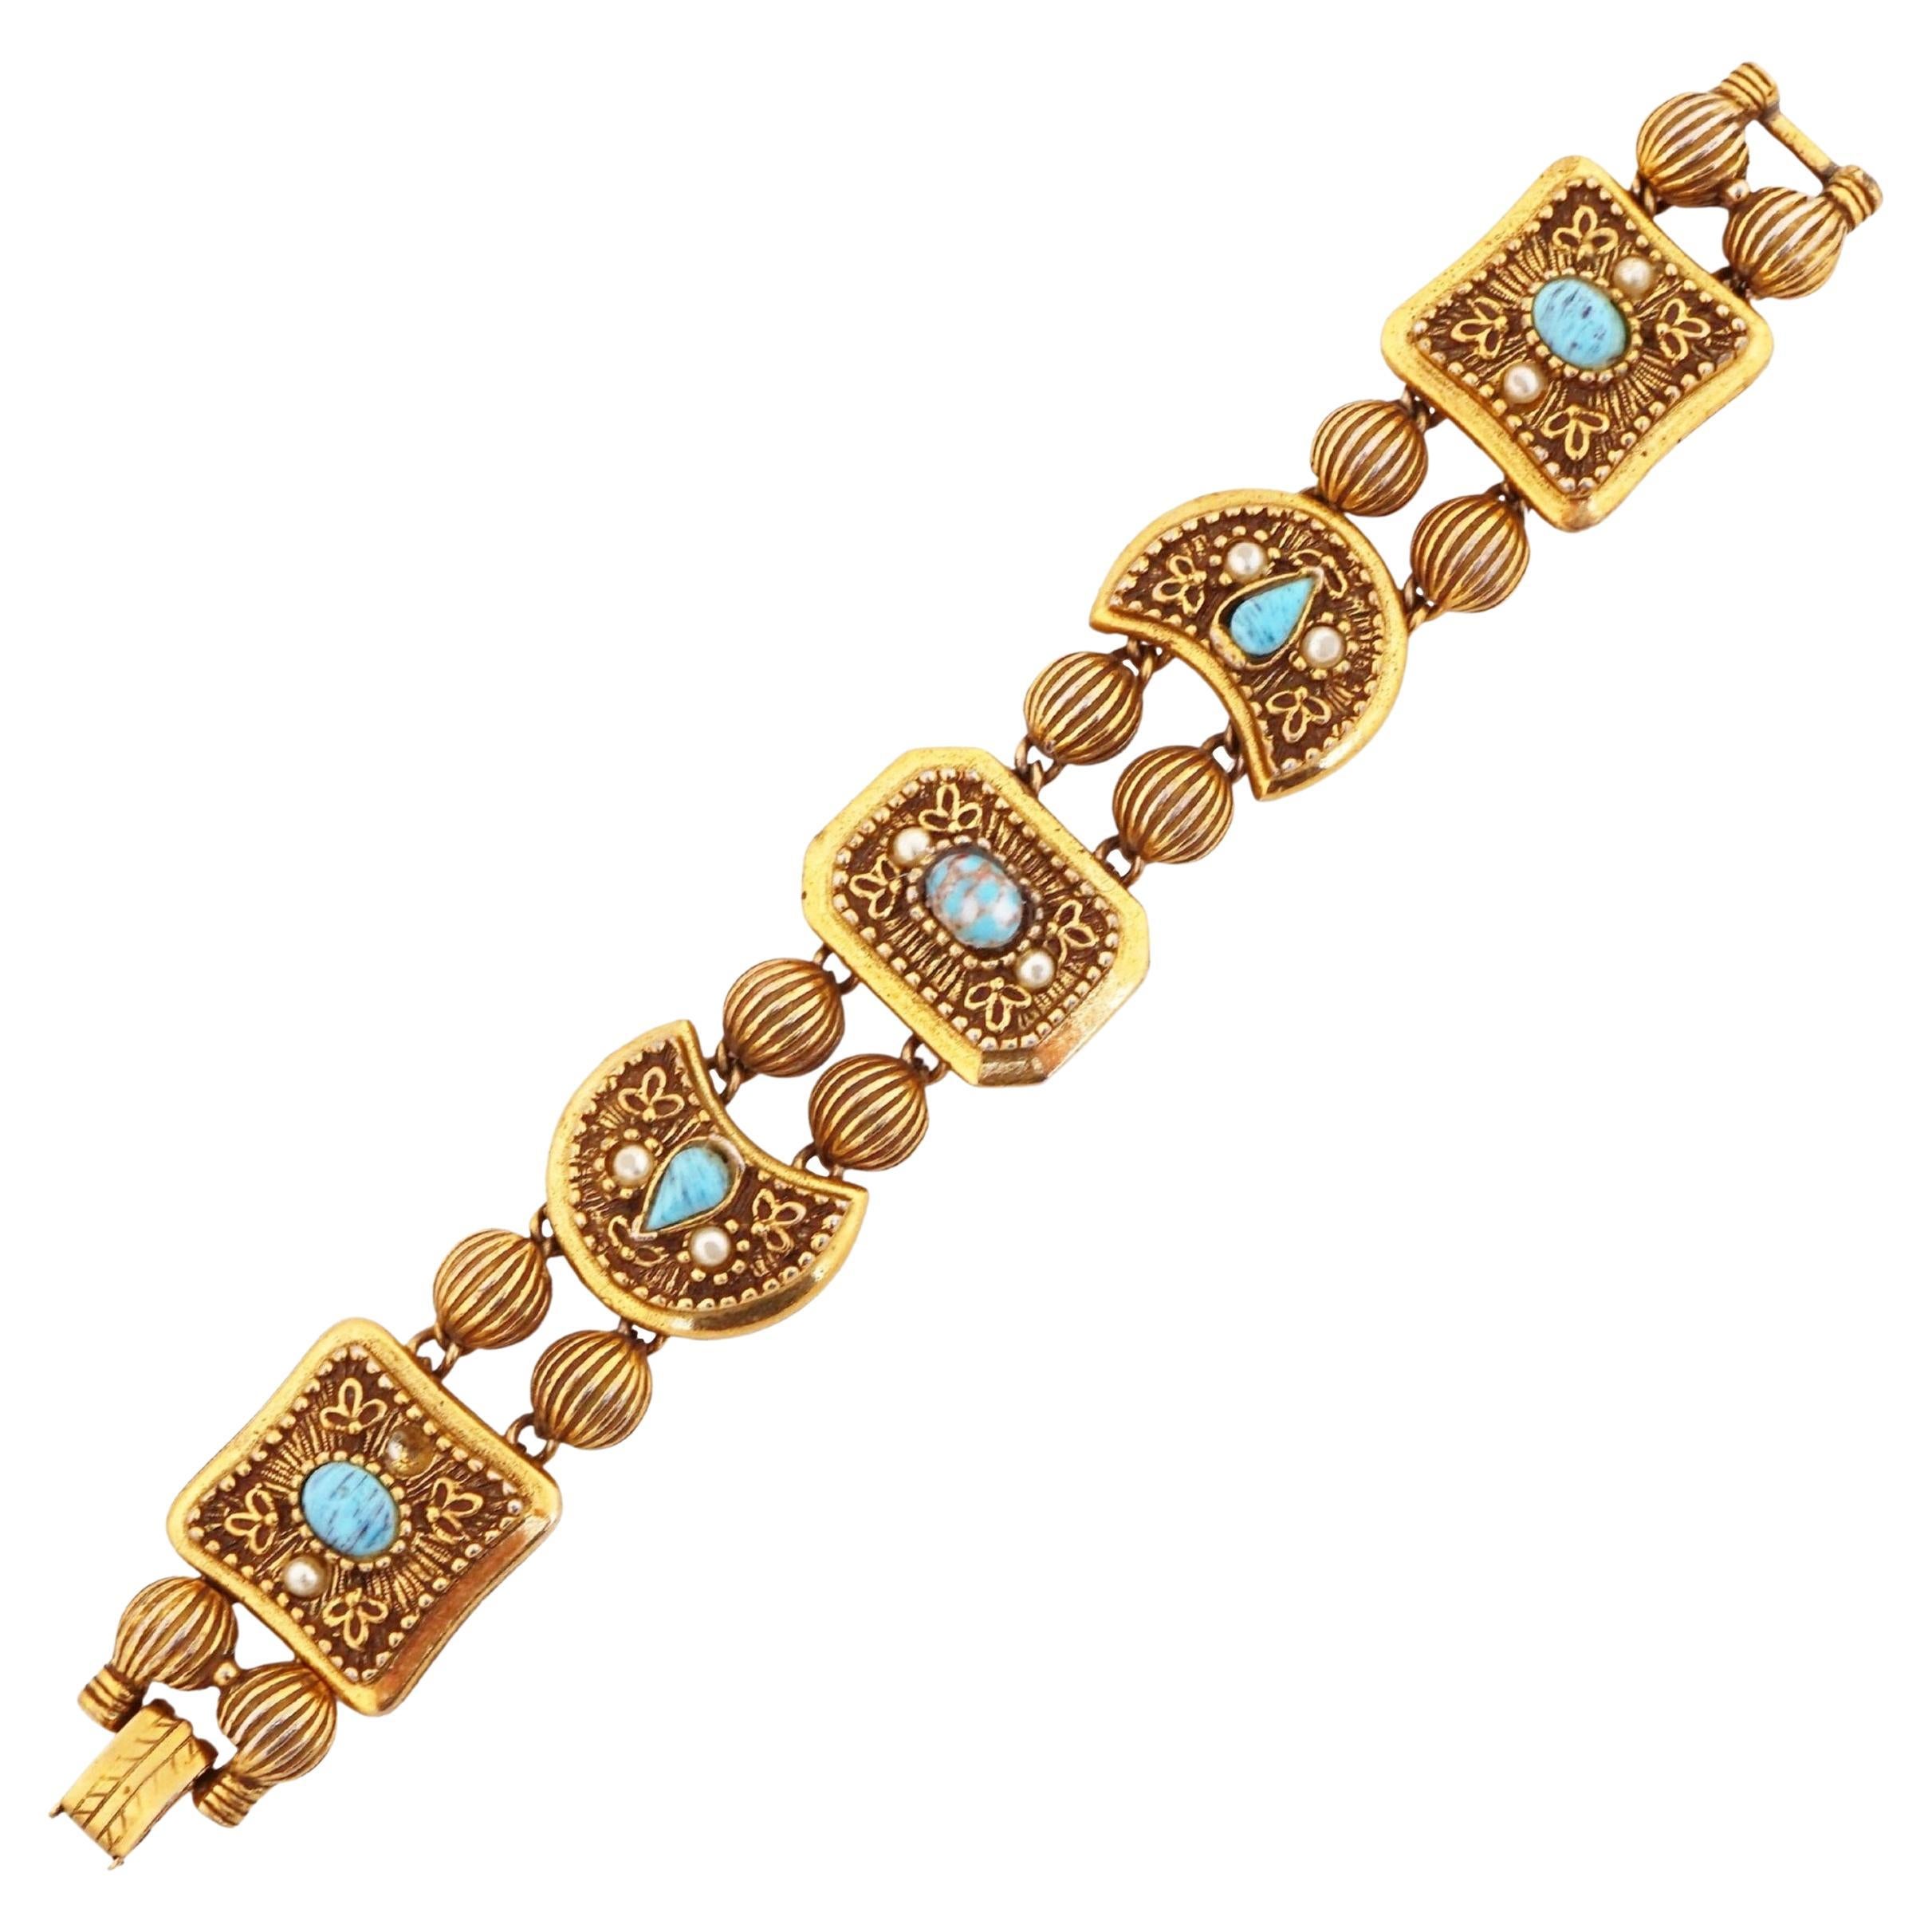 1960s Goldette Victorian Revival Ornate Link Bracelet With Turquoise Cabochons For Sale